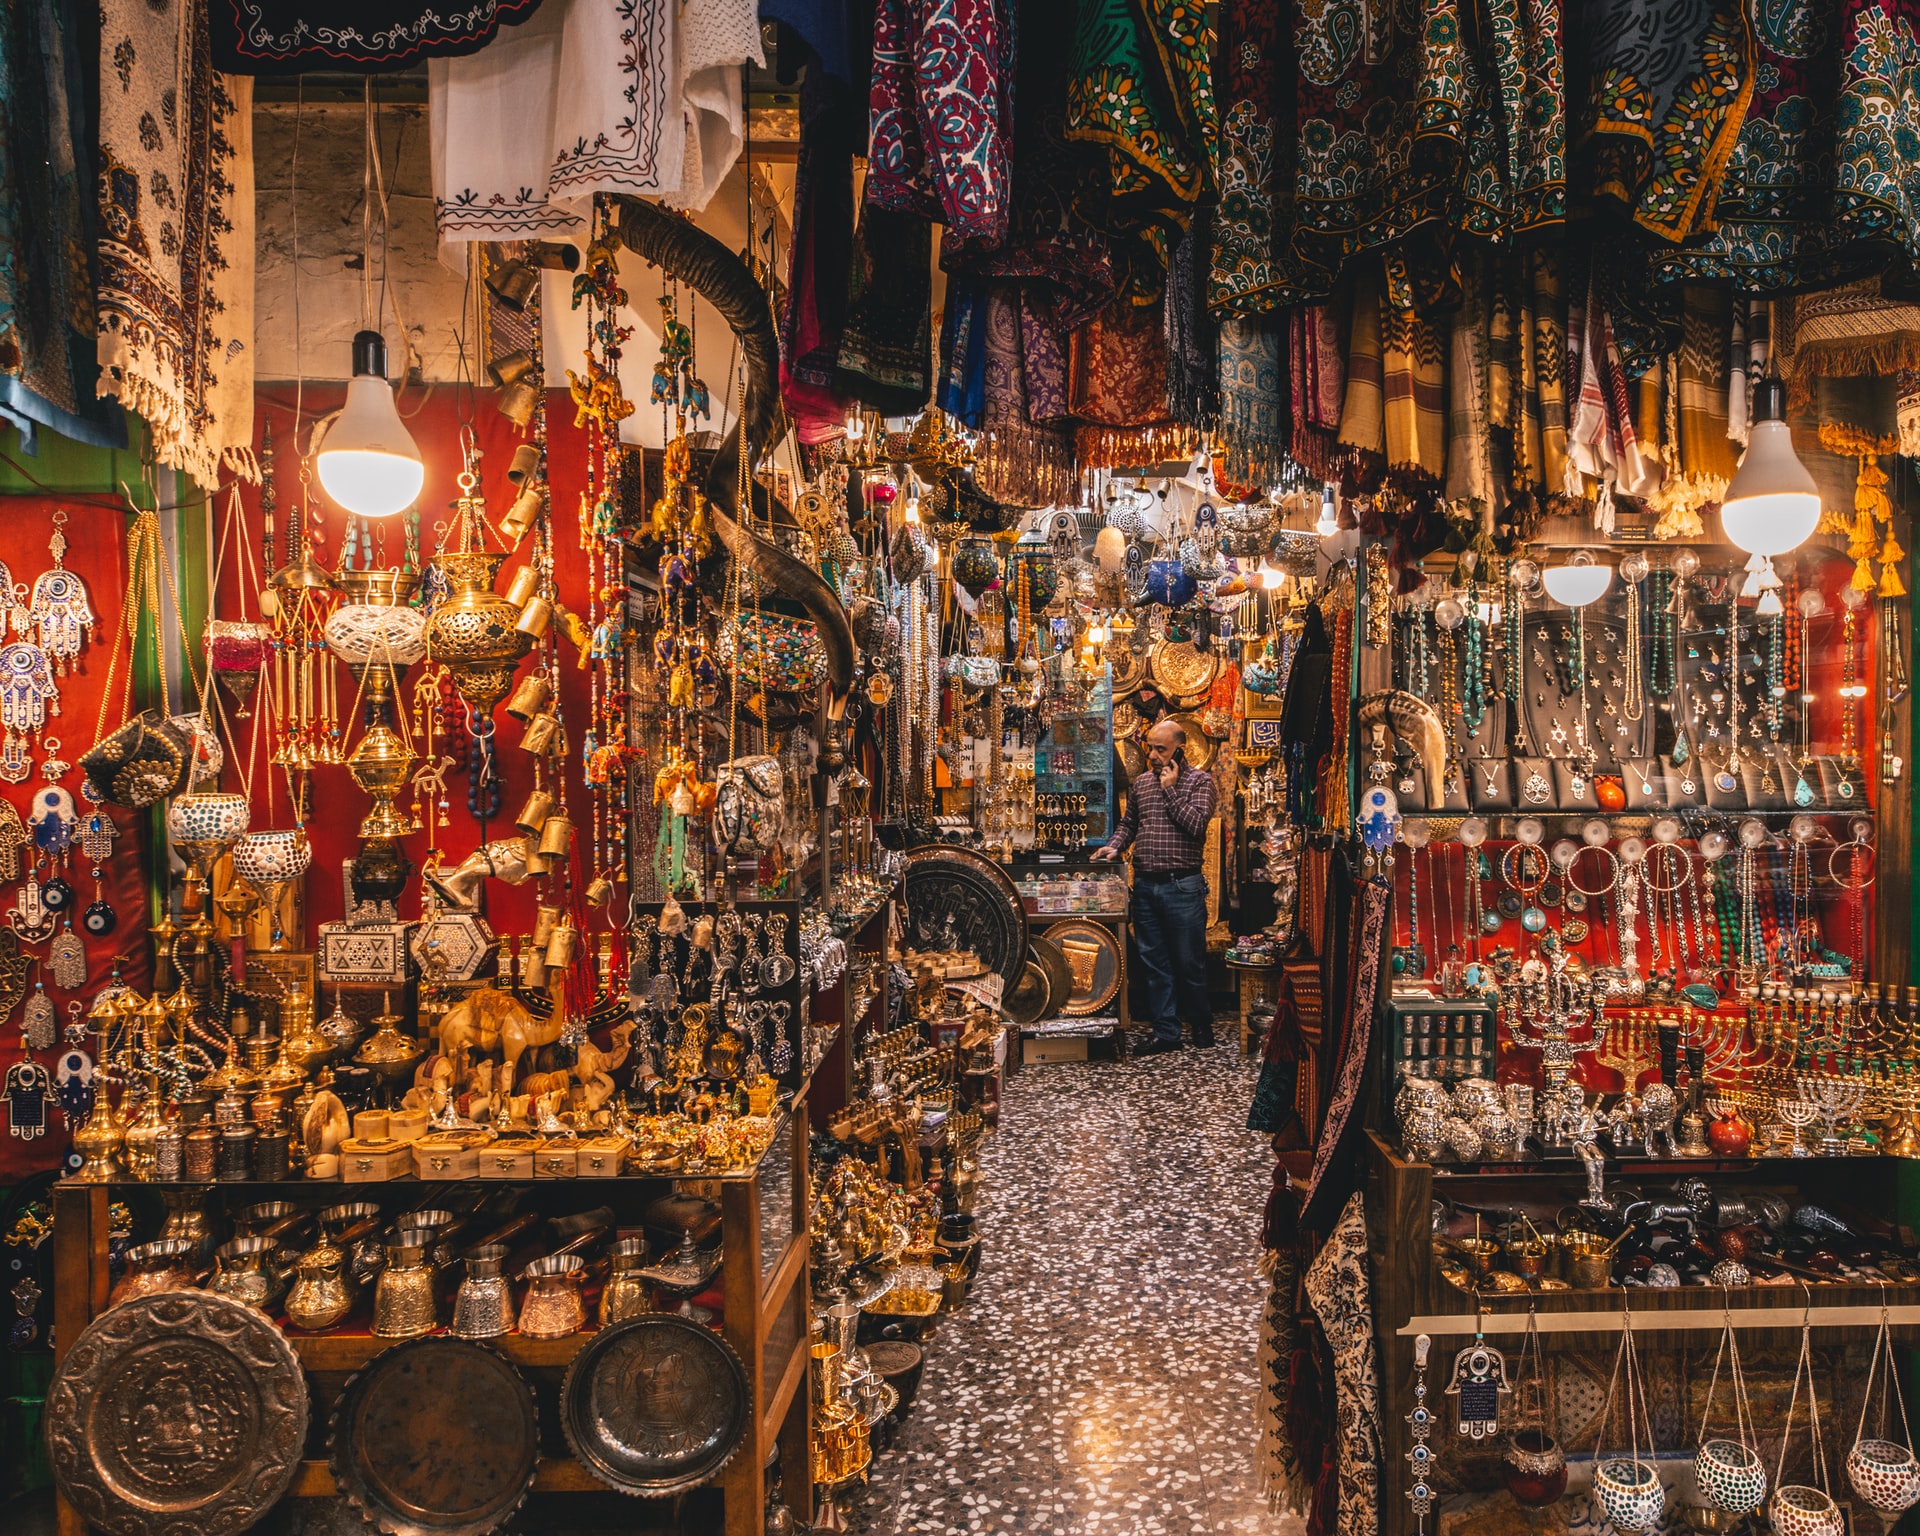 Shop in the Old City of Jerusalem, Israel